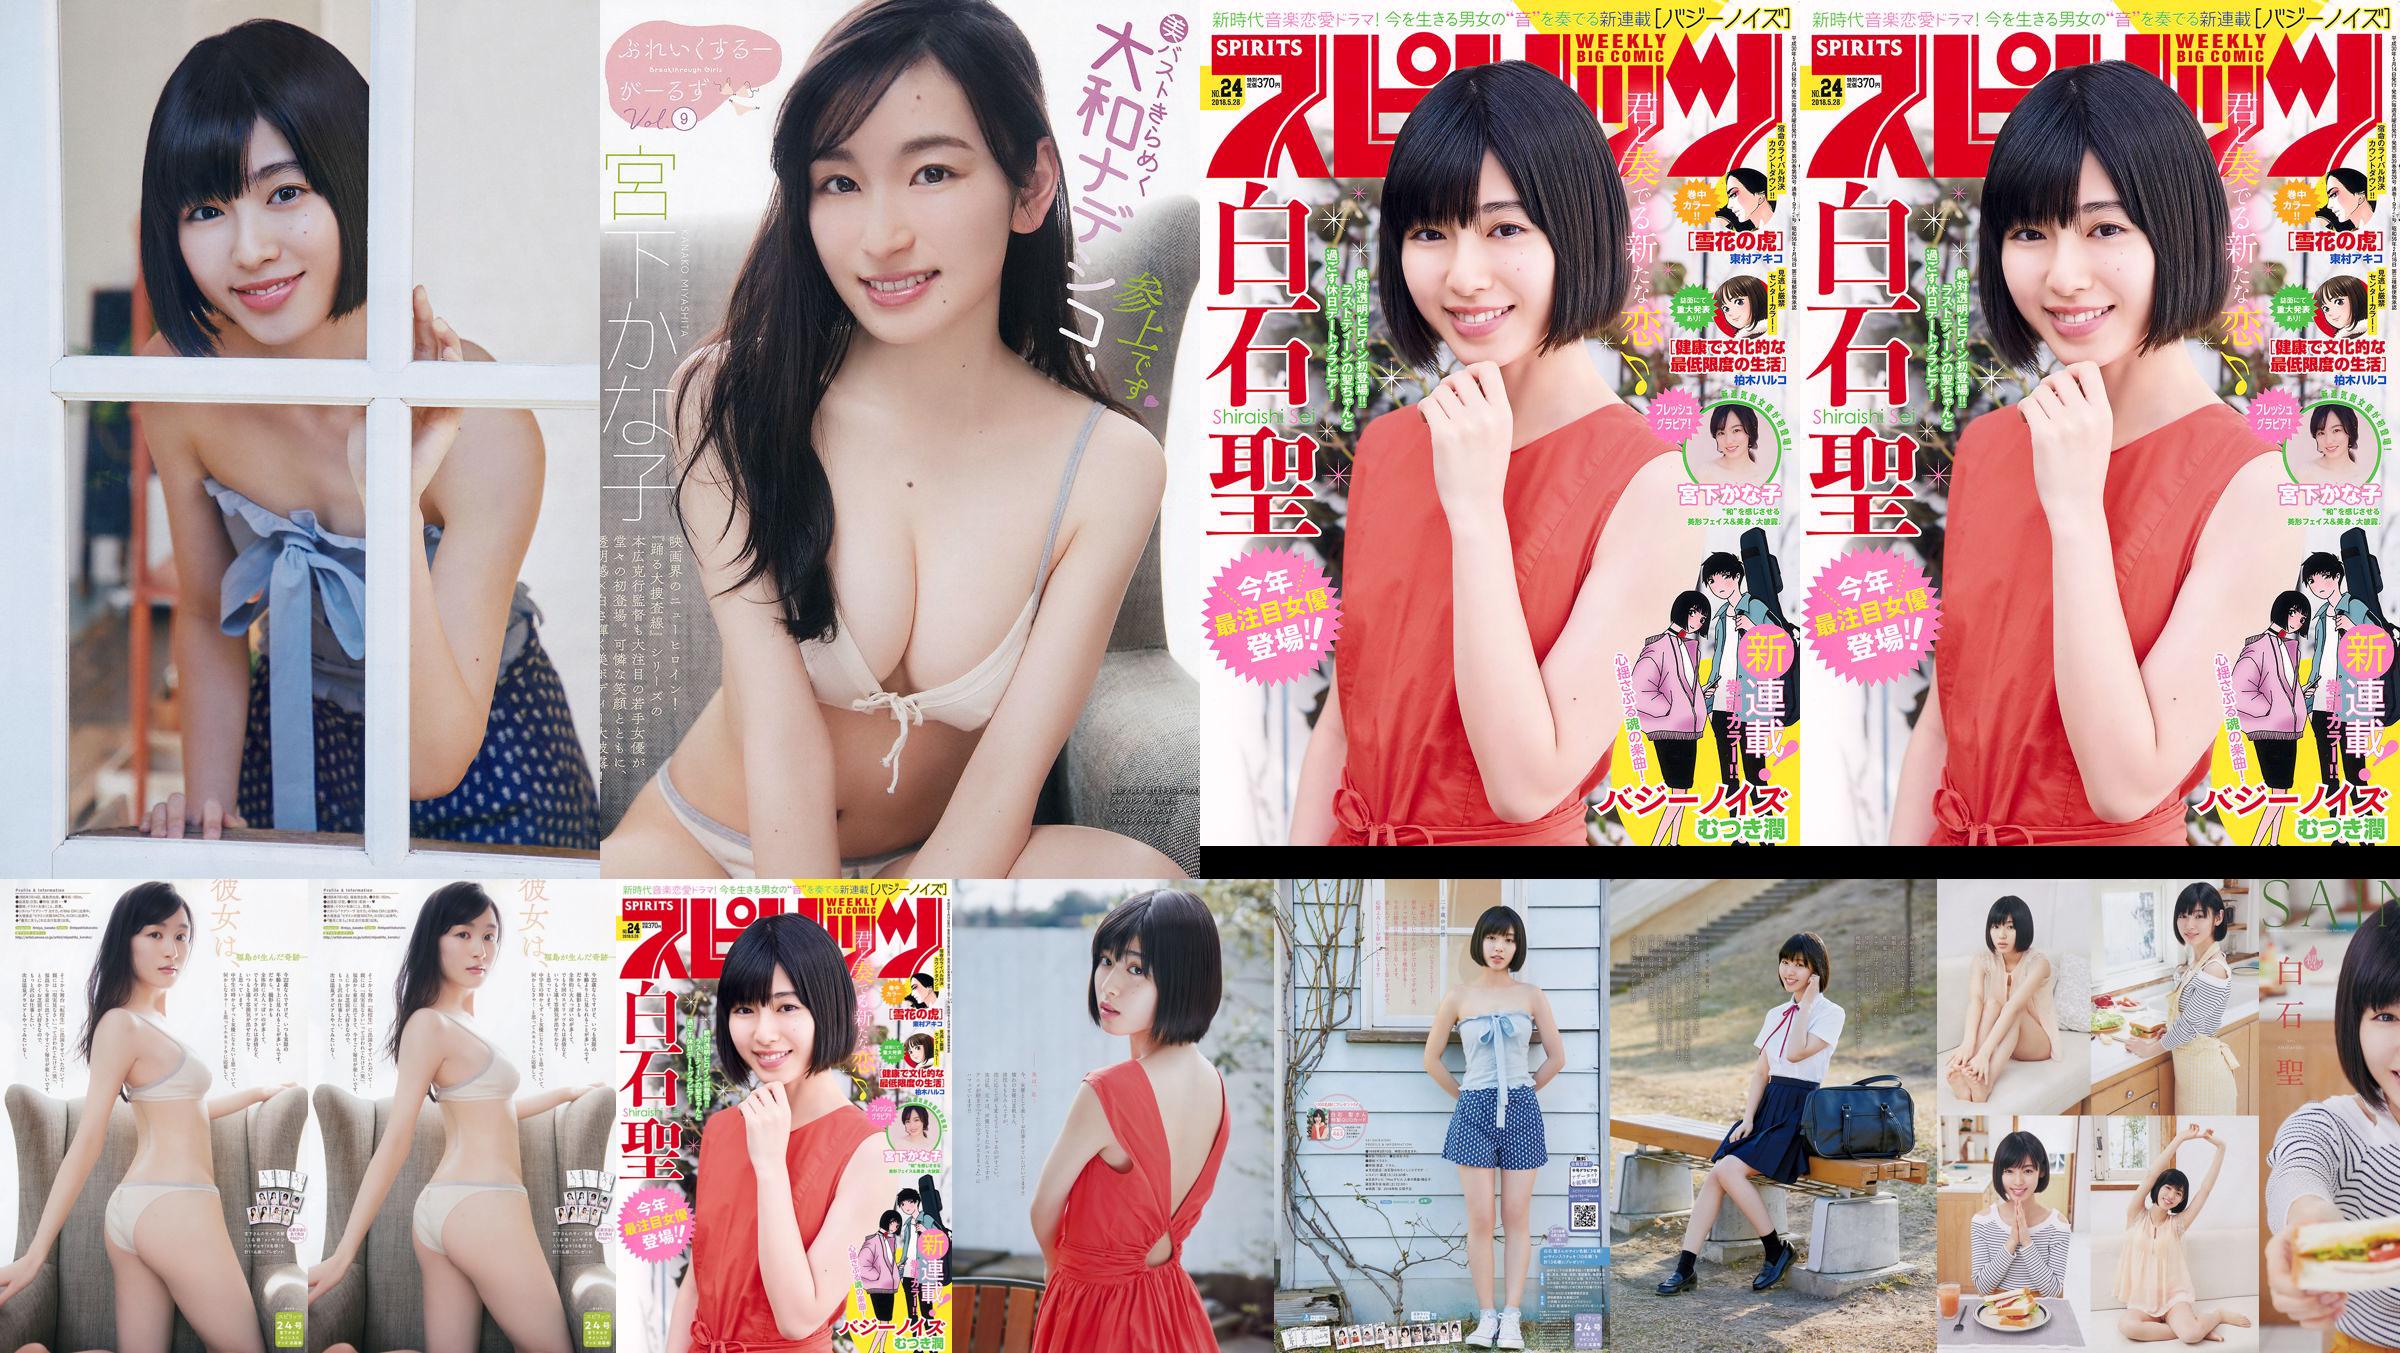 Yuria Kizaki Nana Okada AKB48 Under Girls [Saut hebdomadaire des jeunes] 2015 No.36-37 Photographie No.4ed3f2 Page 1